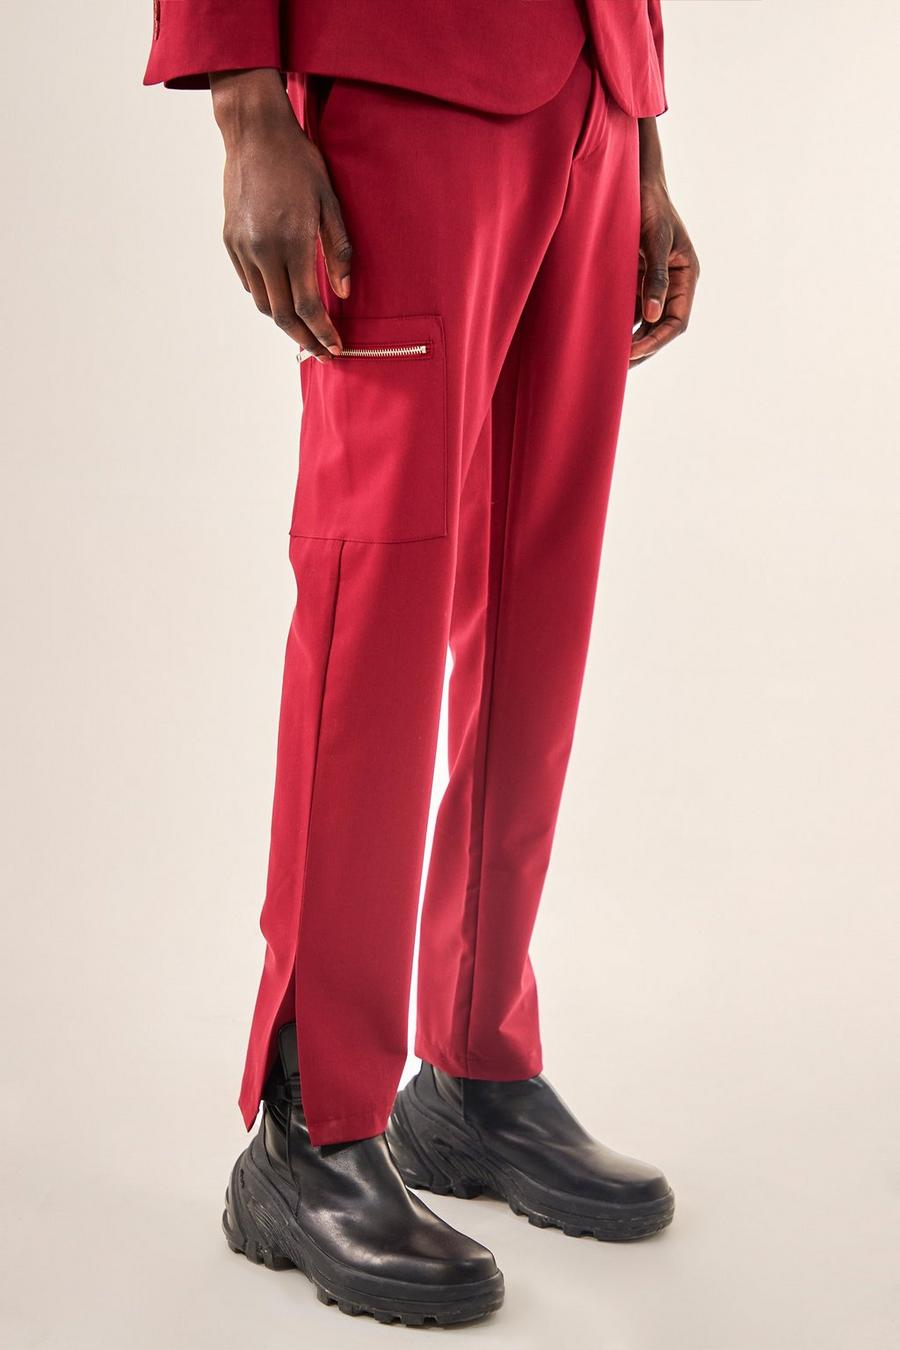 Burgundy red Kostymbyxor i skinny fit med dragkedjor